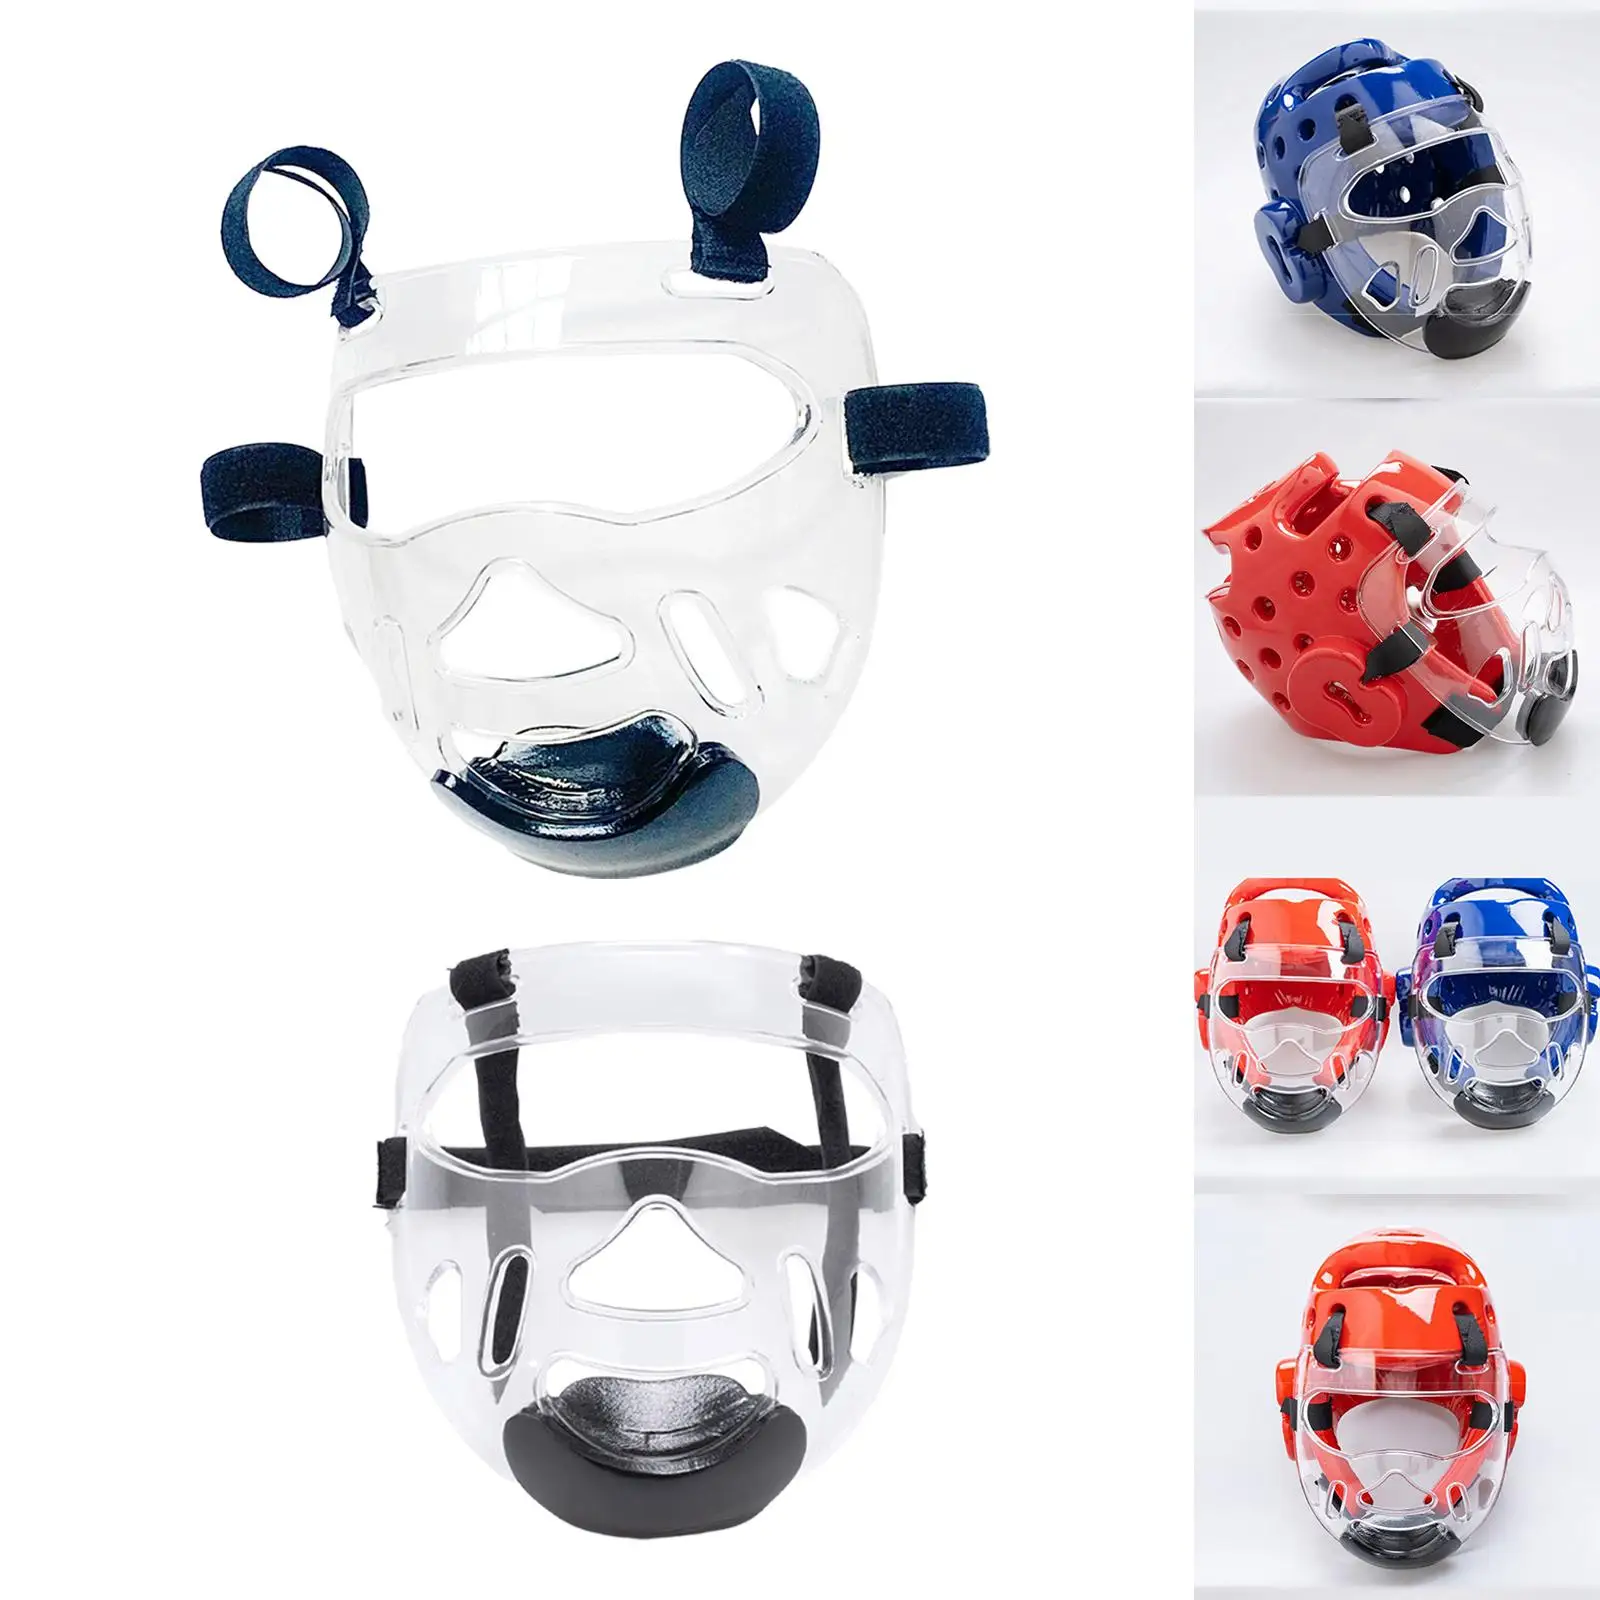 Taekwondo Mask Detachable Head Gear Face Shield Protective Face Protection Cover for Boxing